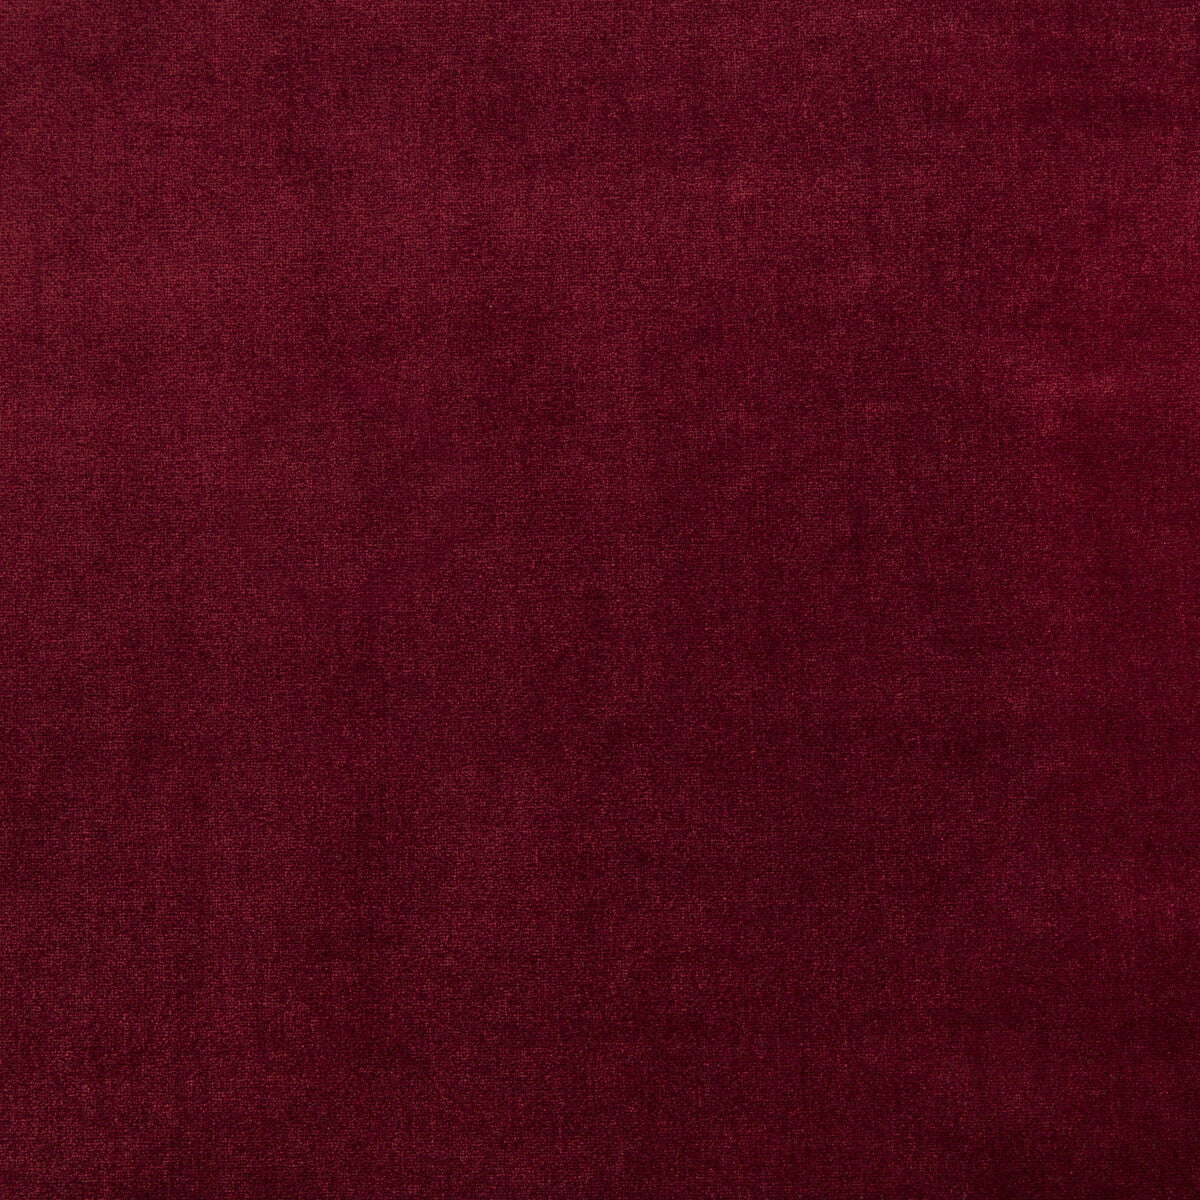 Duchess Velvet fabric in merlot color - pattern 2016121.97.0 - by Lee Jofa